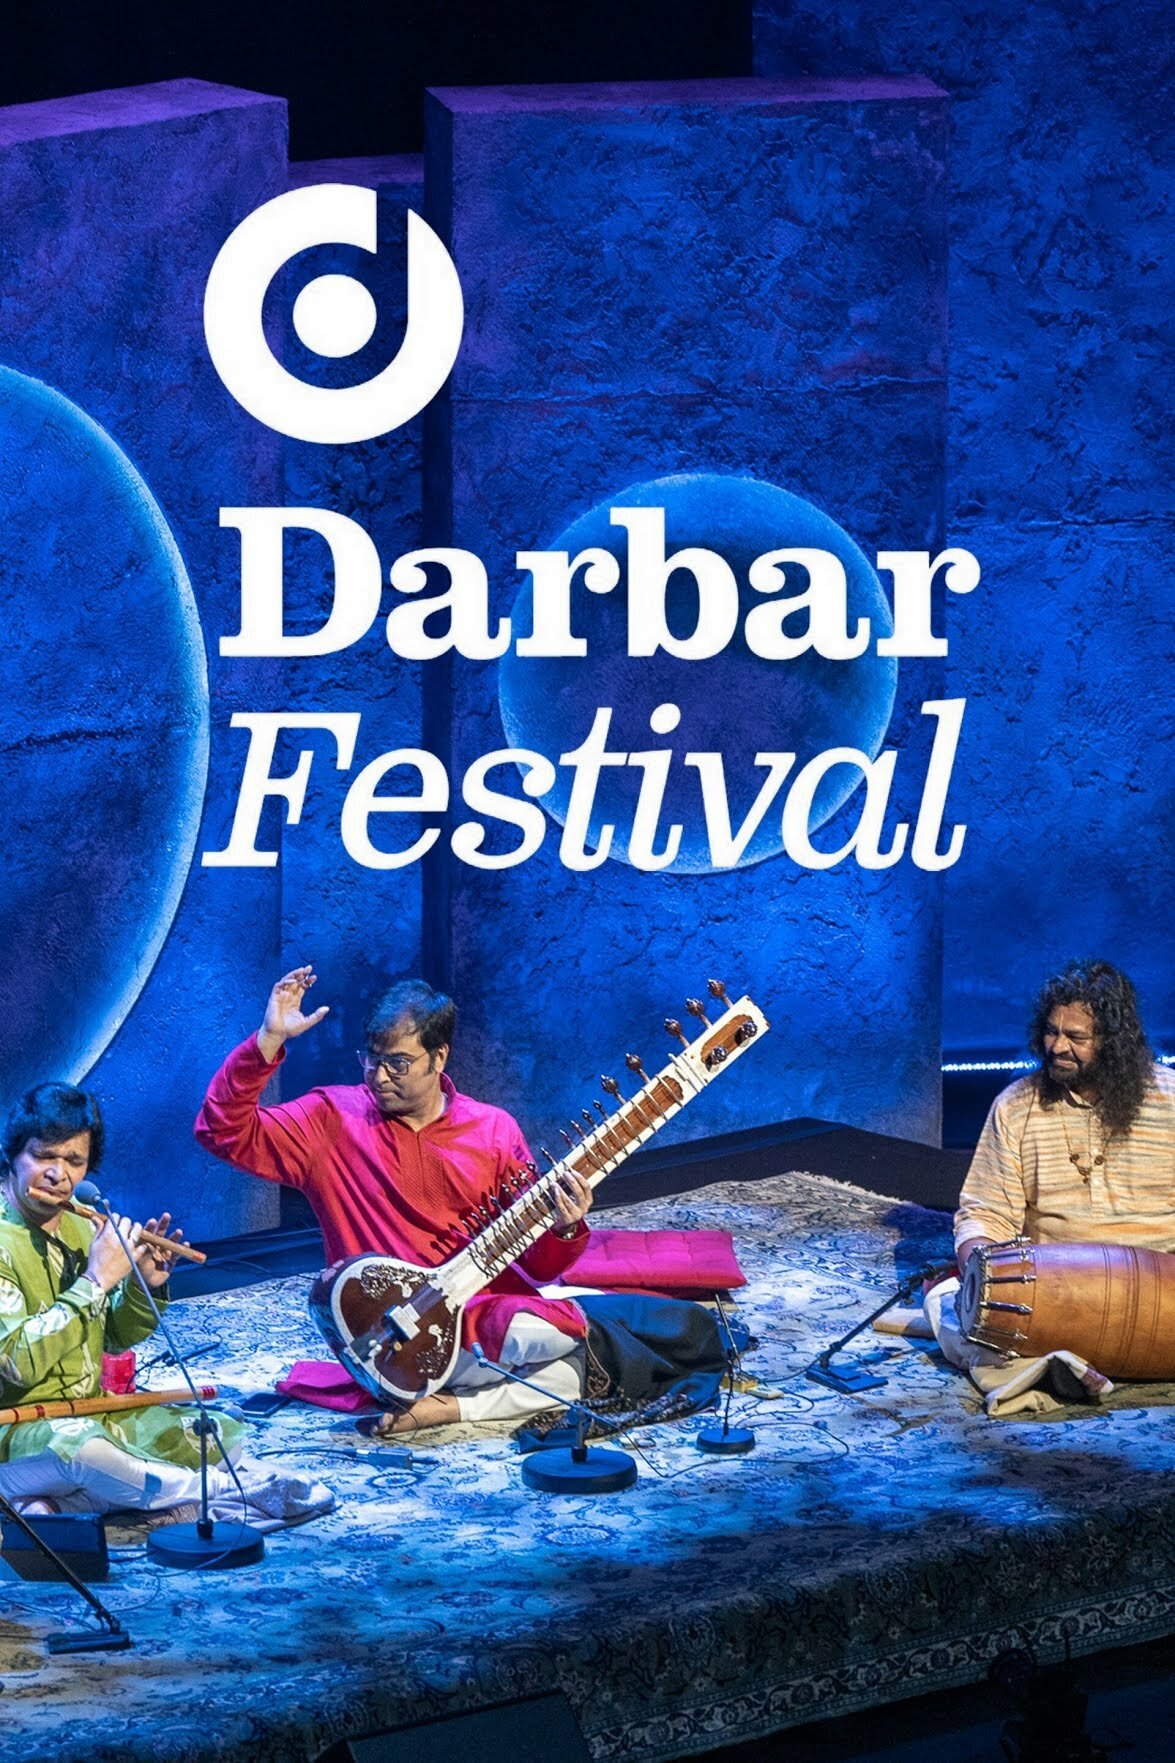 Darbar Festival ne zaman